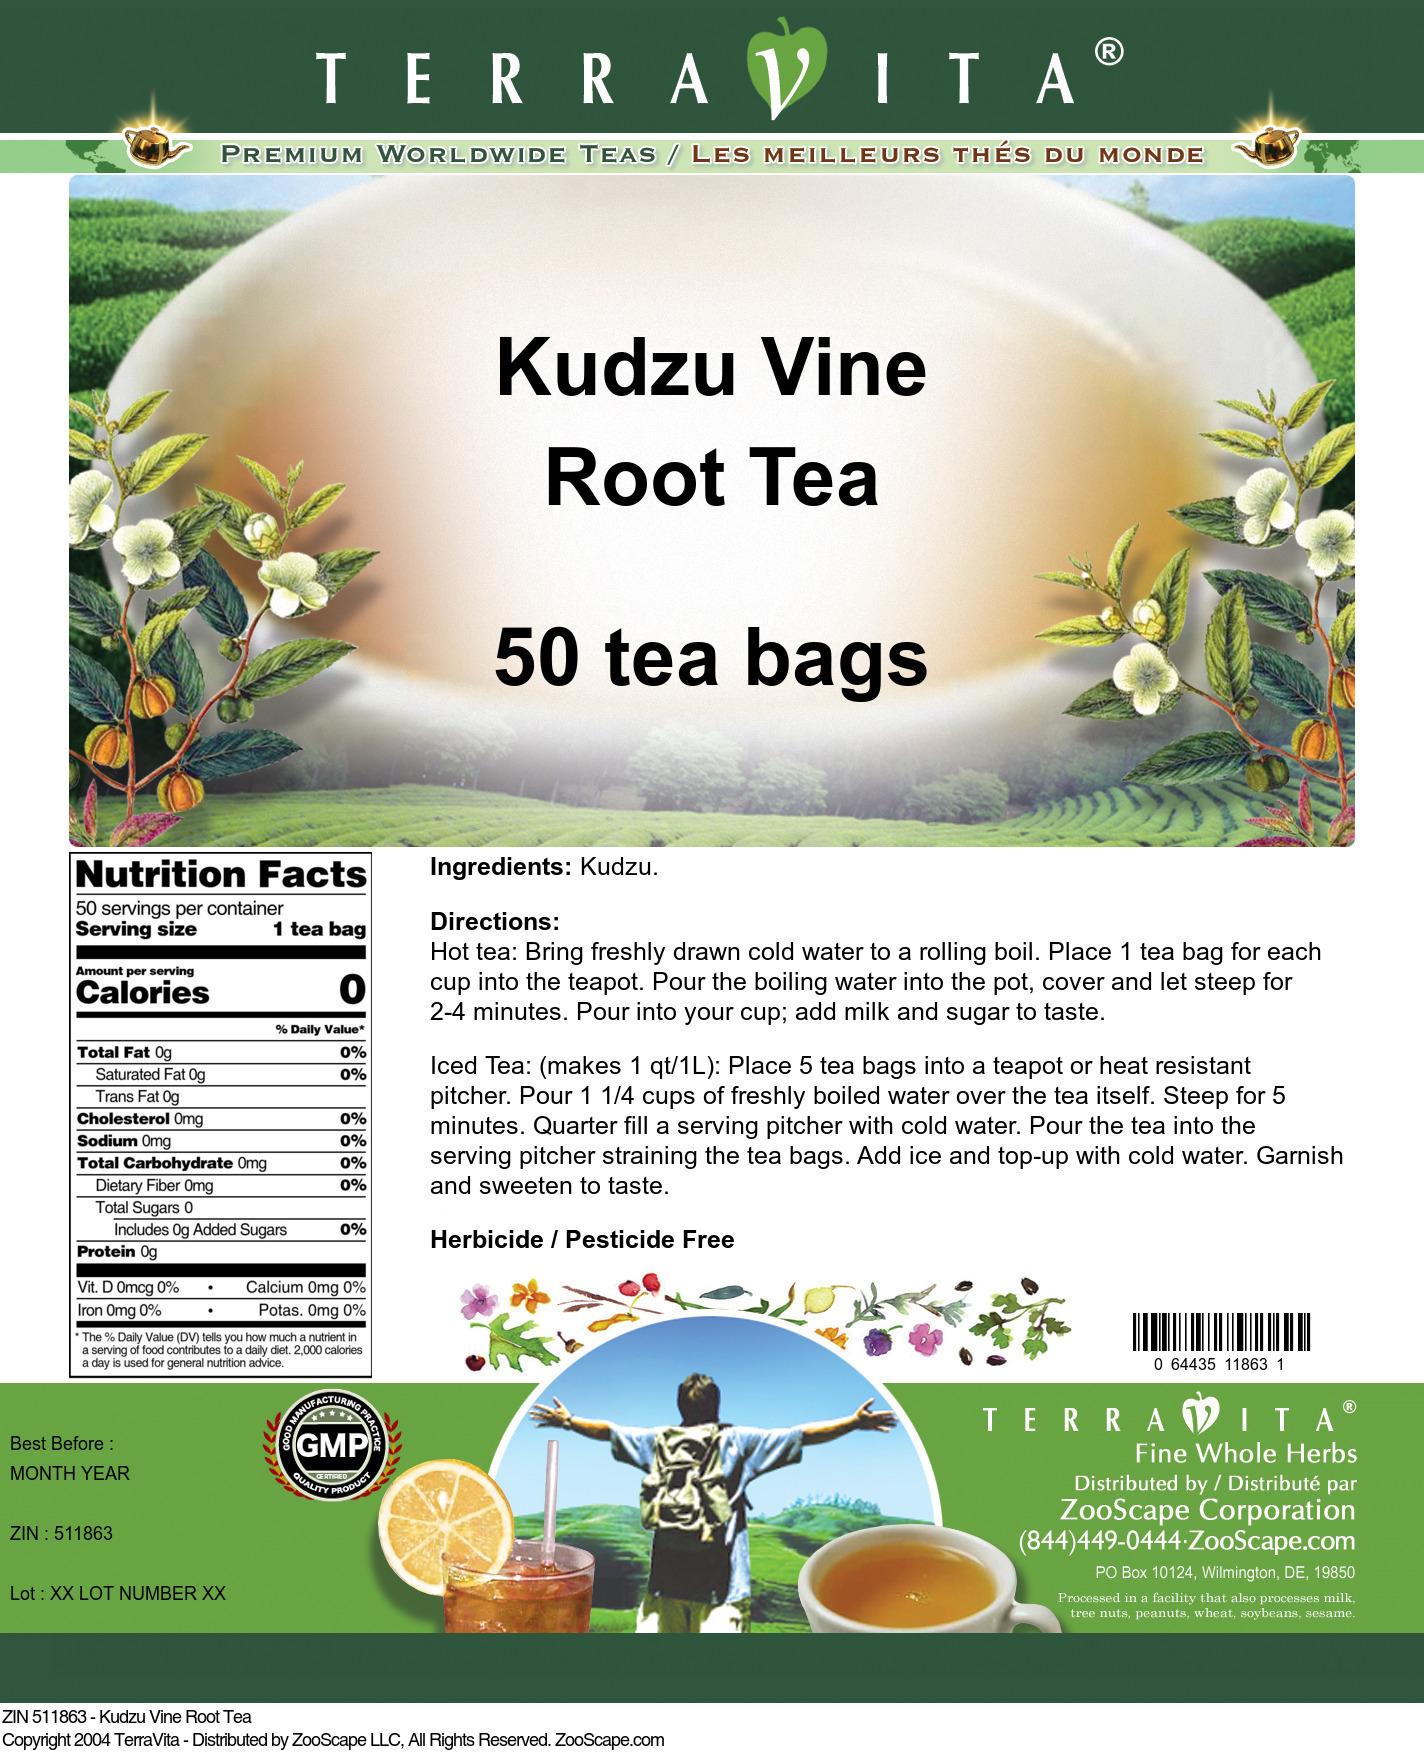 Kudzu Vine Root Tea - Label